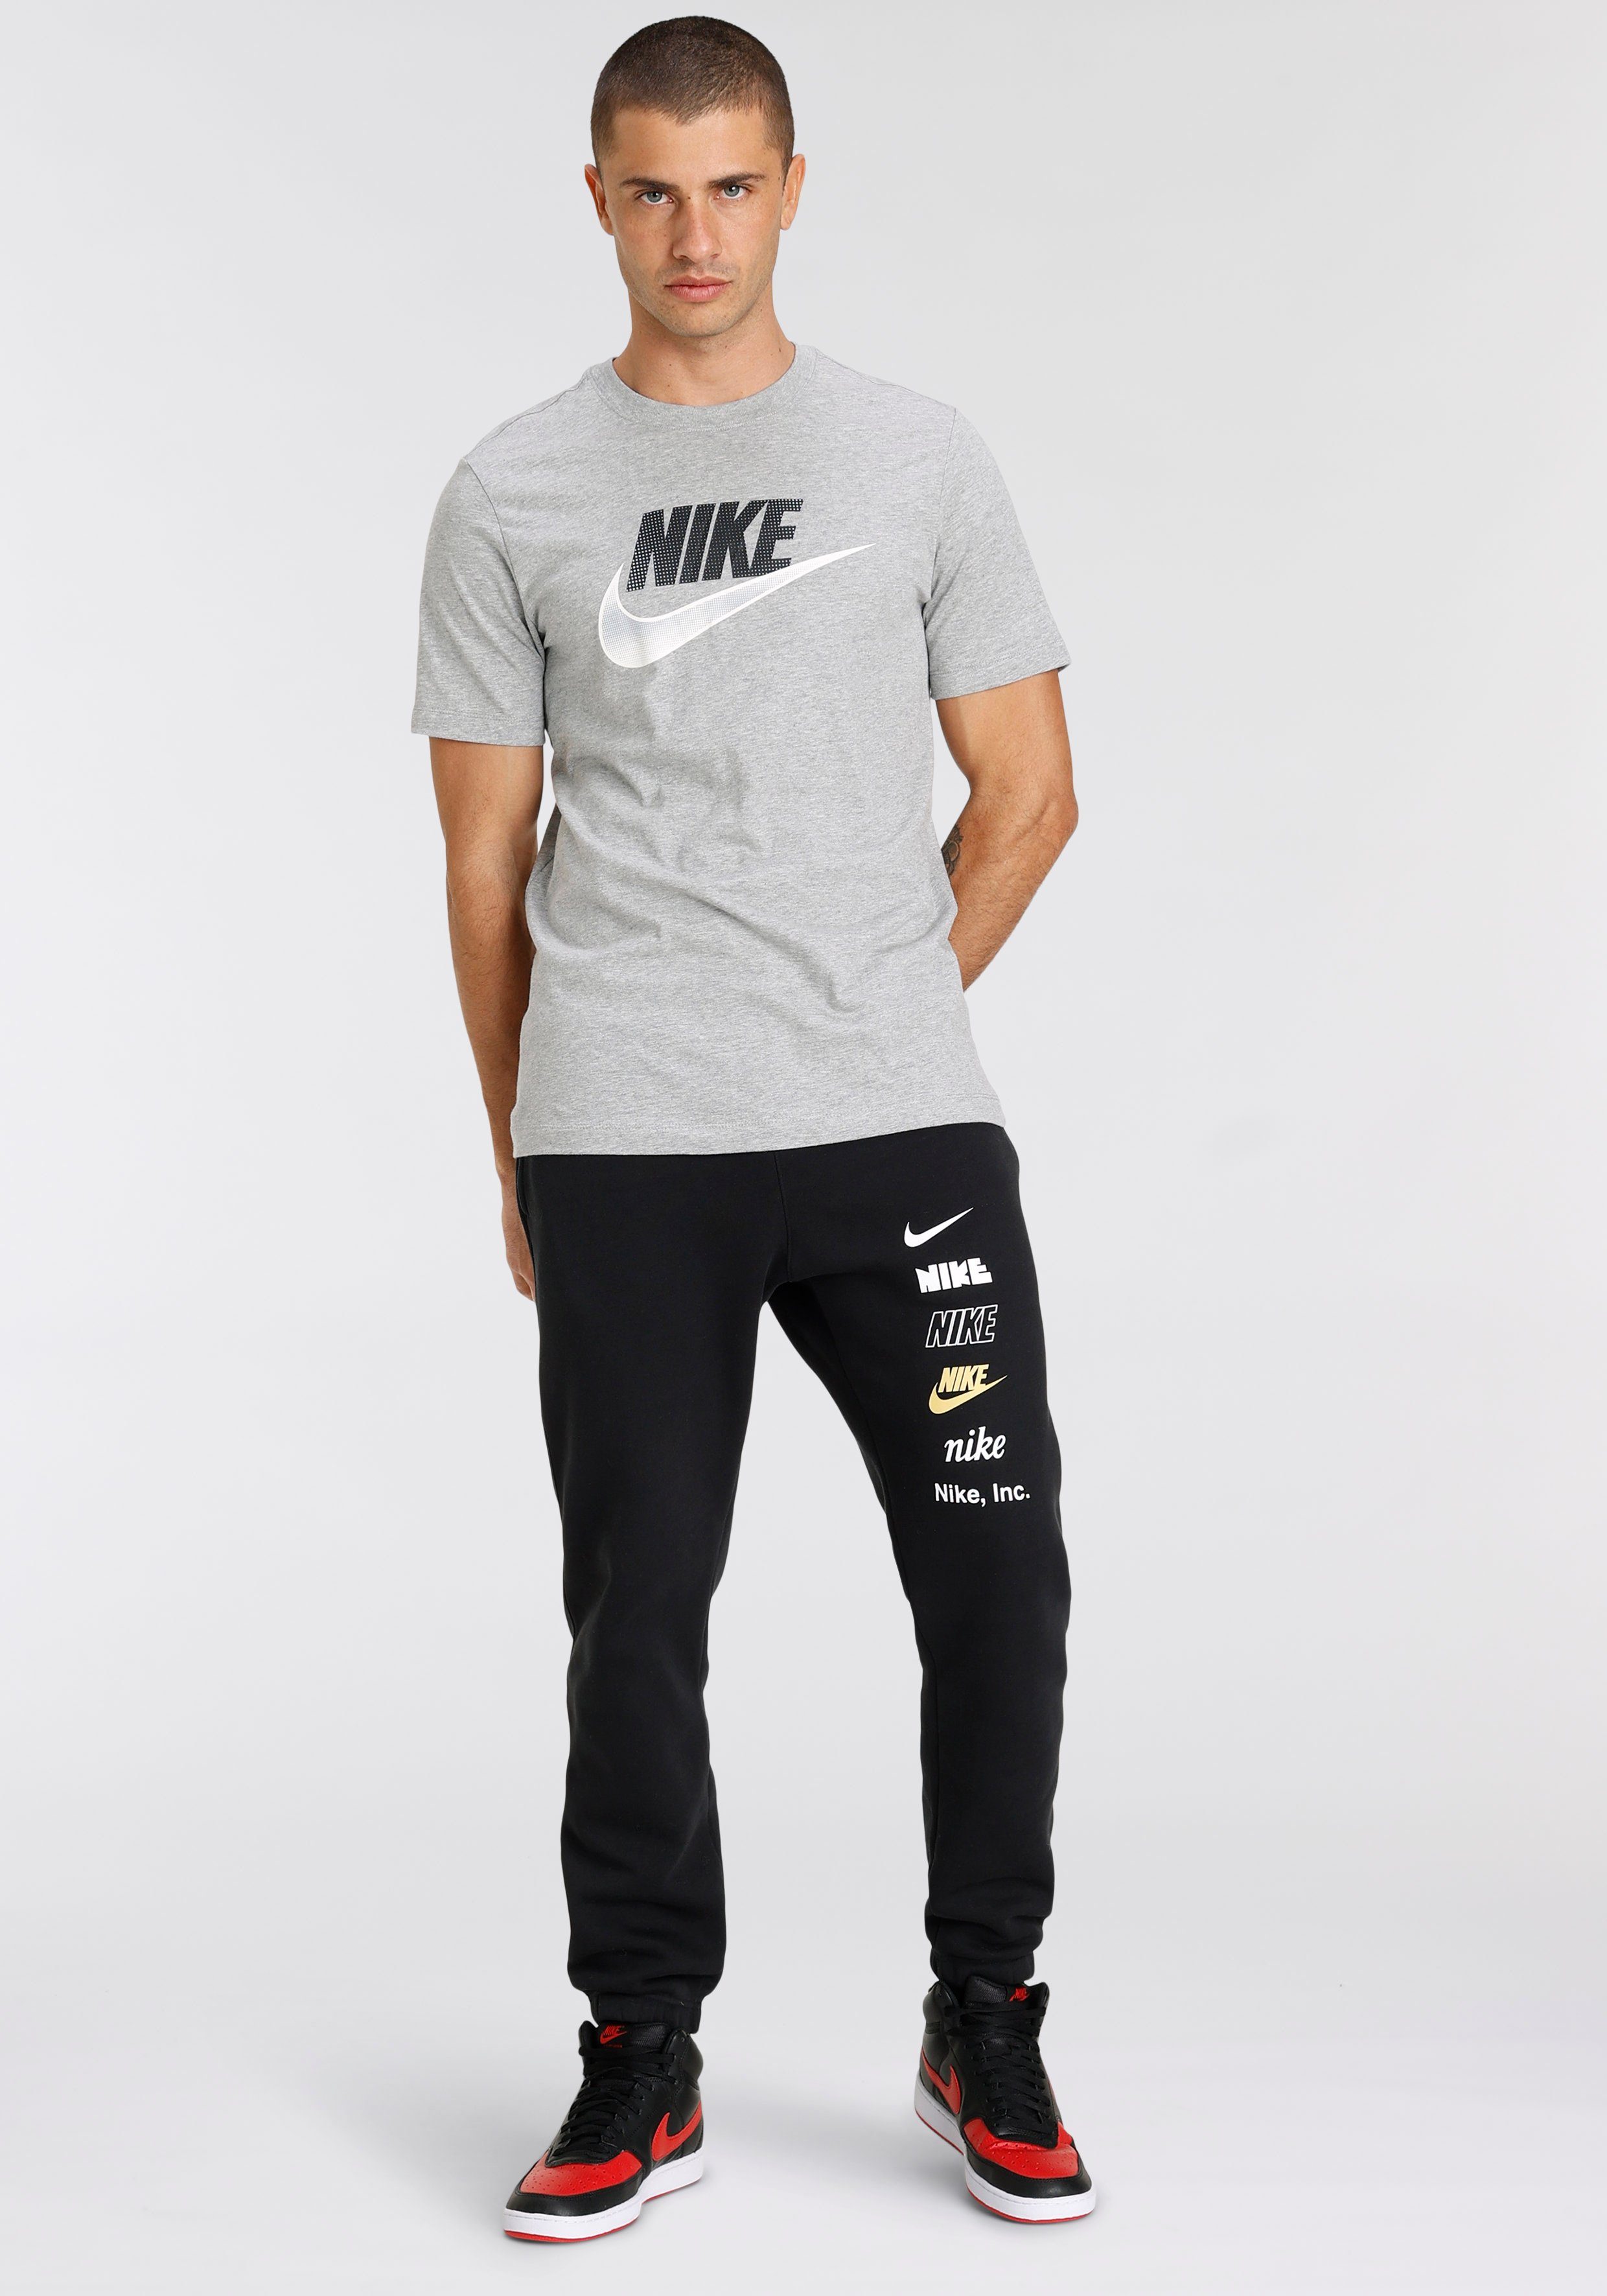 Nike Sportswear T-Shirt Men's T-Shirt DK GREY HEATHER